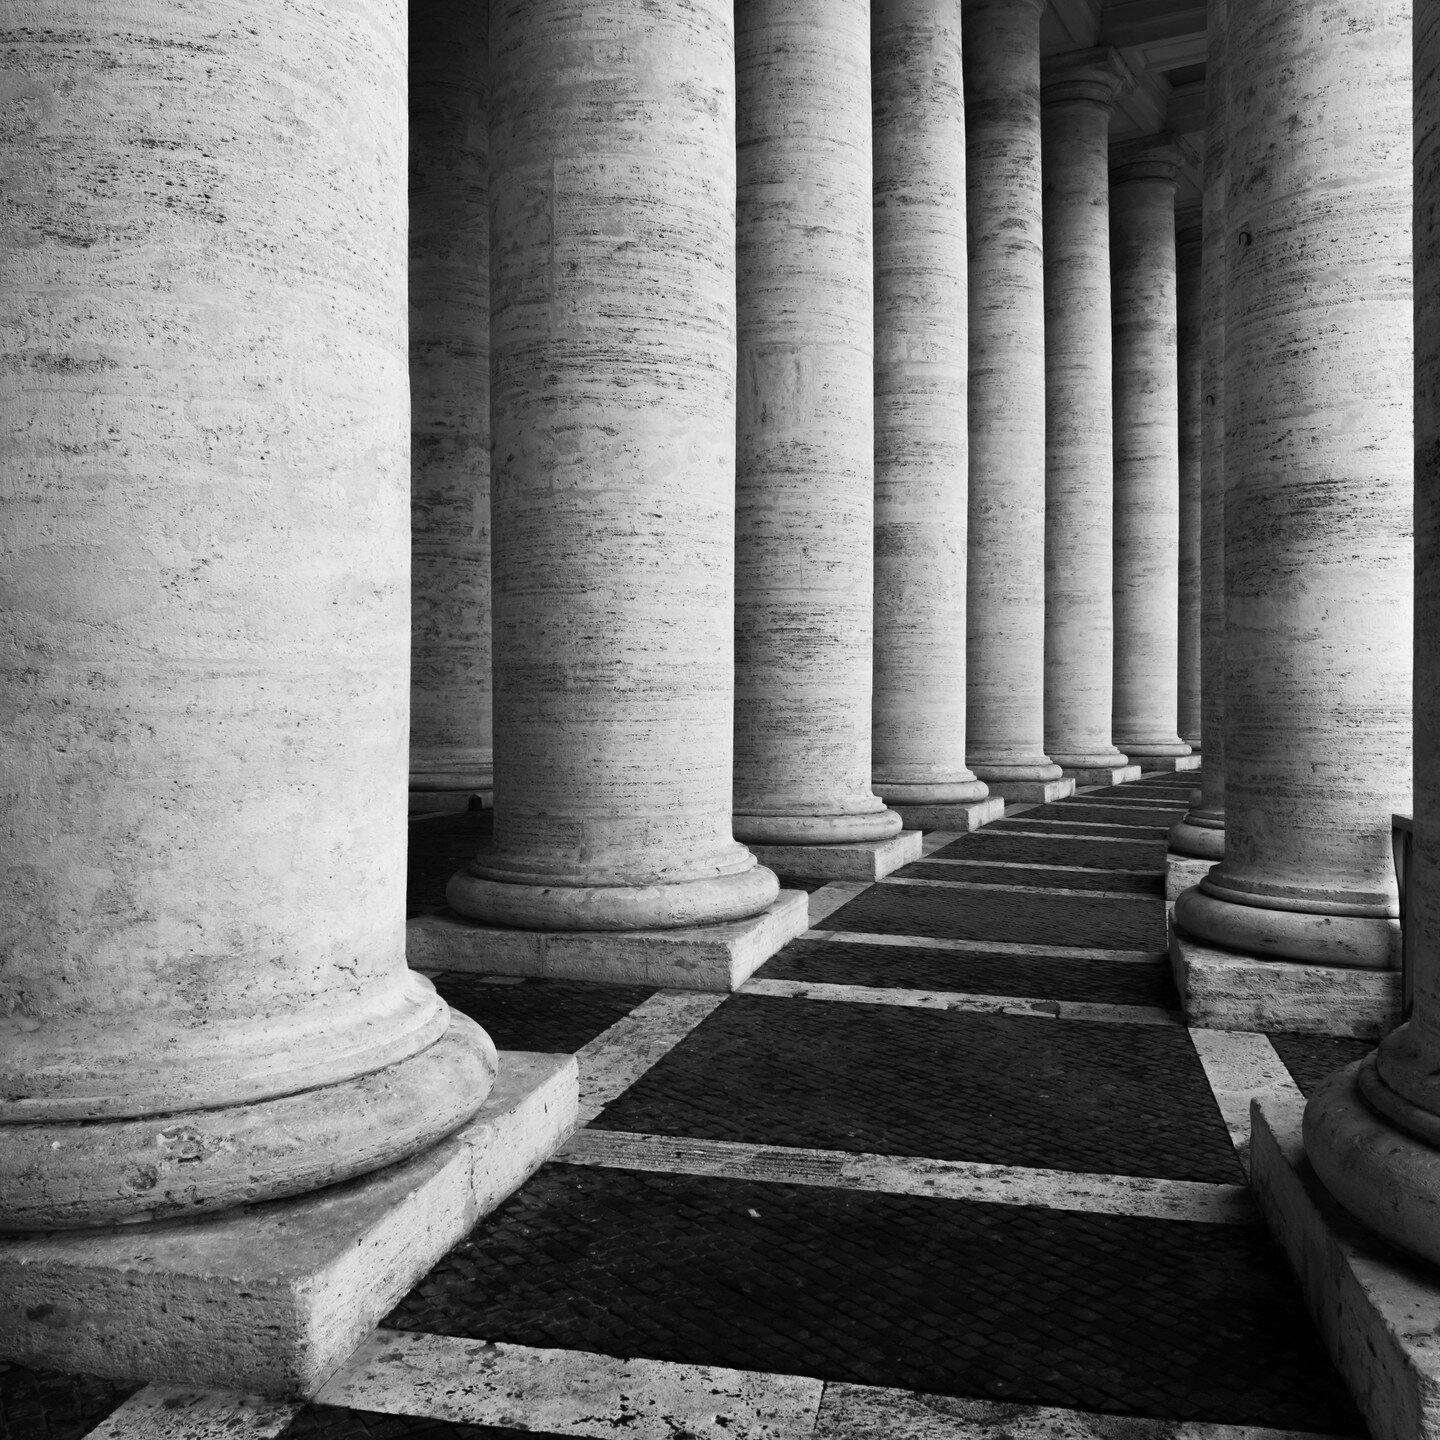 Pillars, Piazza Pietro
#Rome #Roma #Rom #piazzapietro #Pillars #Italy #Nikon #bnw #bnwphotography #bnwfineart